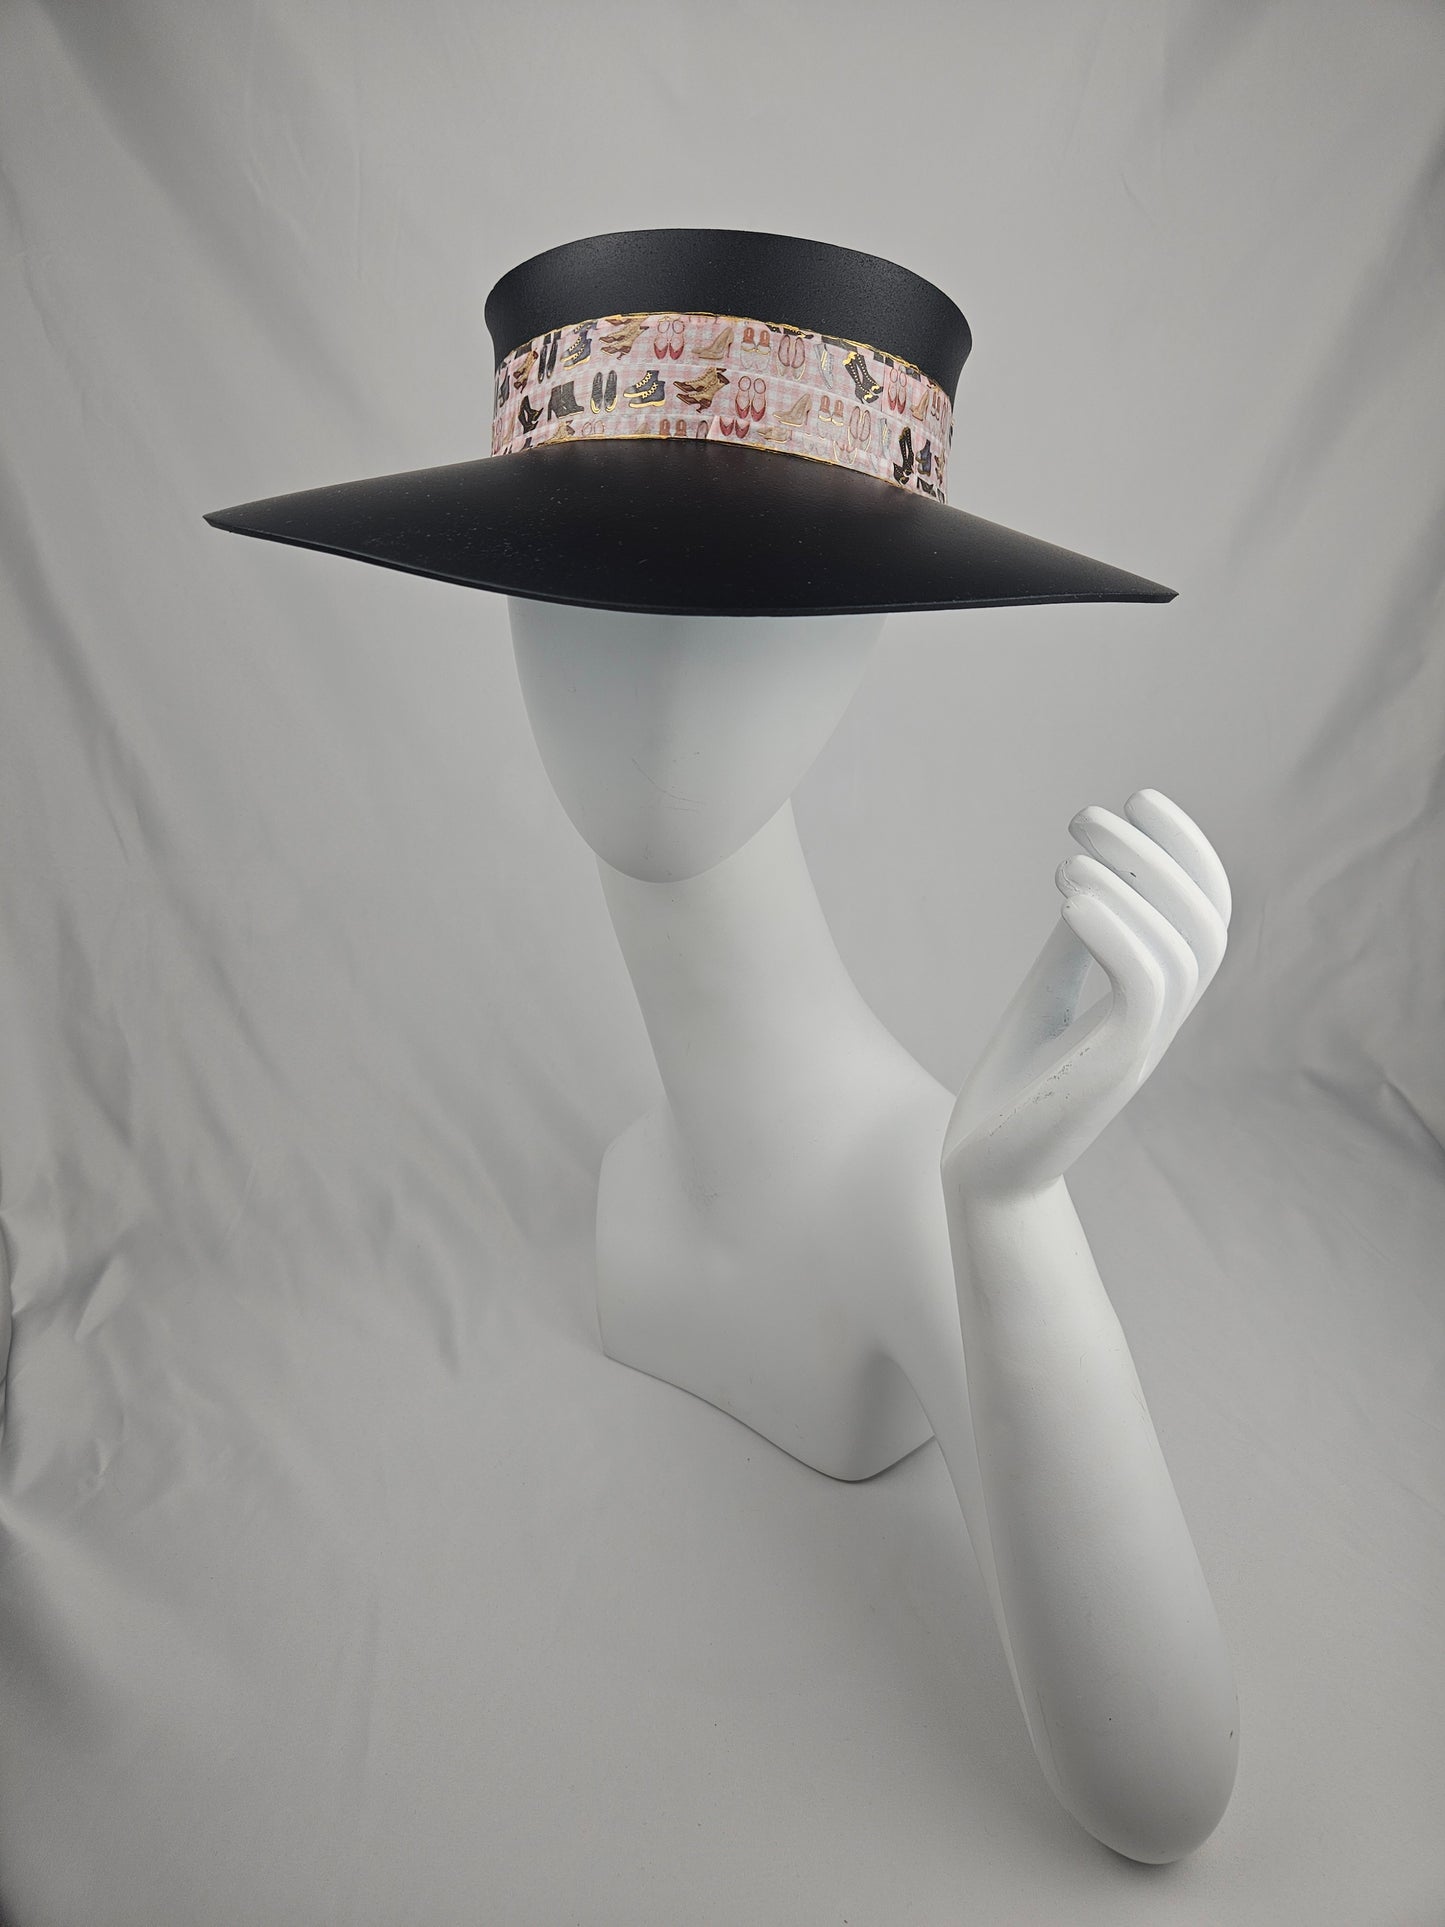 Timeless Black Audrey Foam Sun Visor Hat with Cute Shoe Themed Band: 1950s, Walks, Brunch, Tea, Golf, Wedding, Church, No Headache, Easter, Pool, Beach